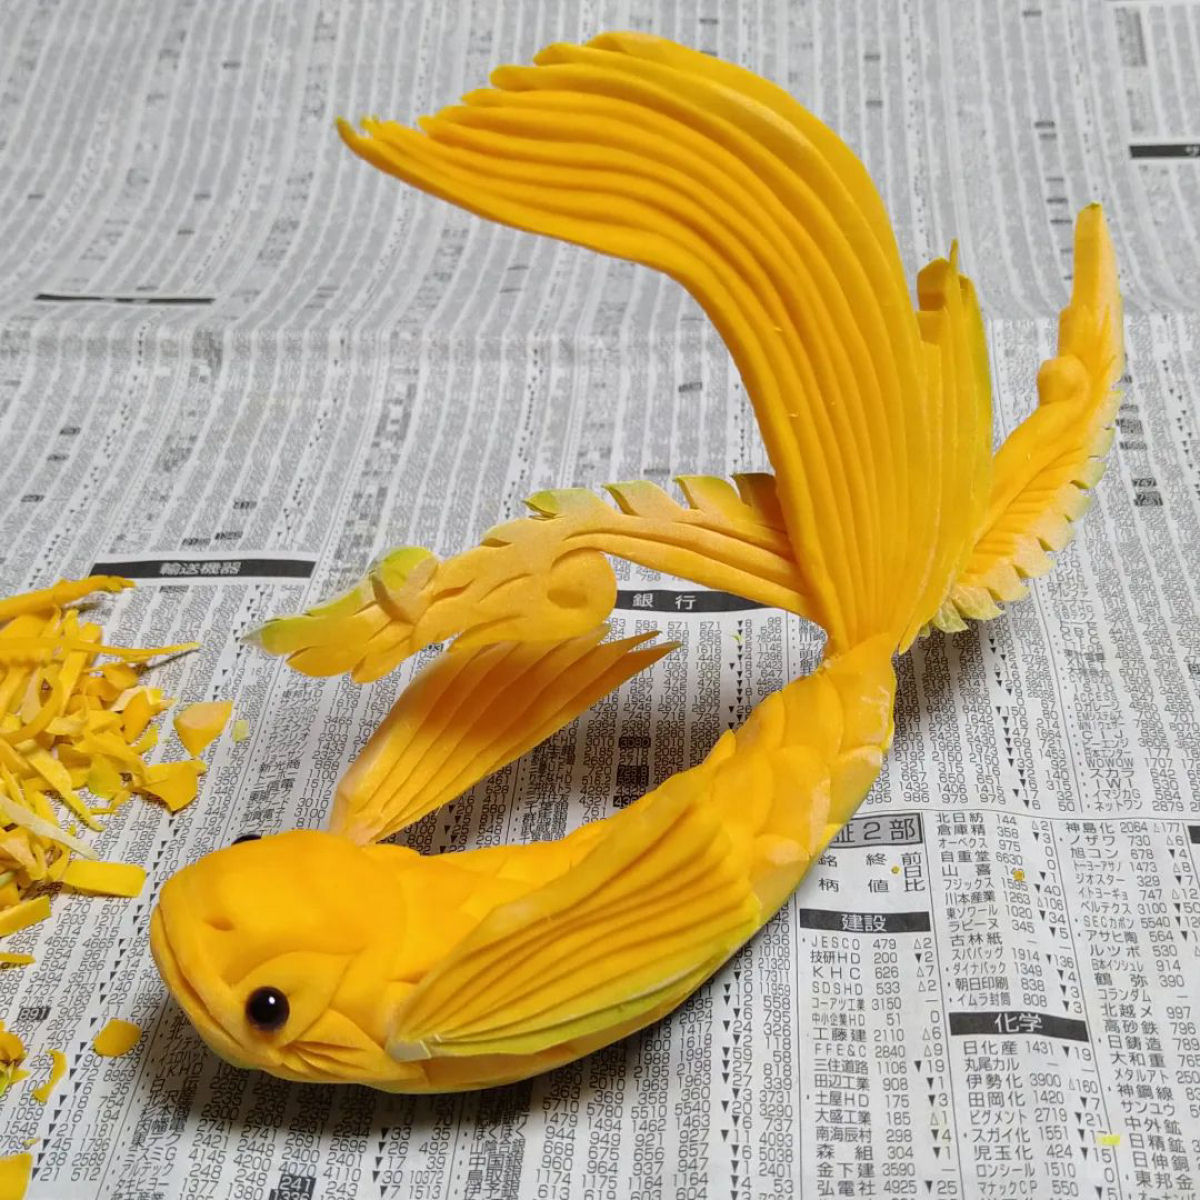 Escultor japons transforma frutas e legumes  em esculturas comestveis brilhantes 10